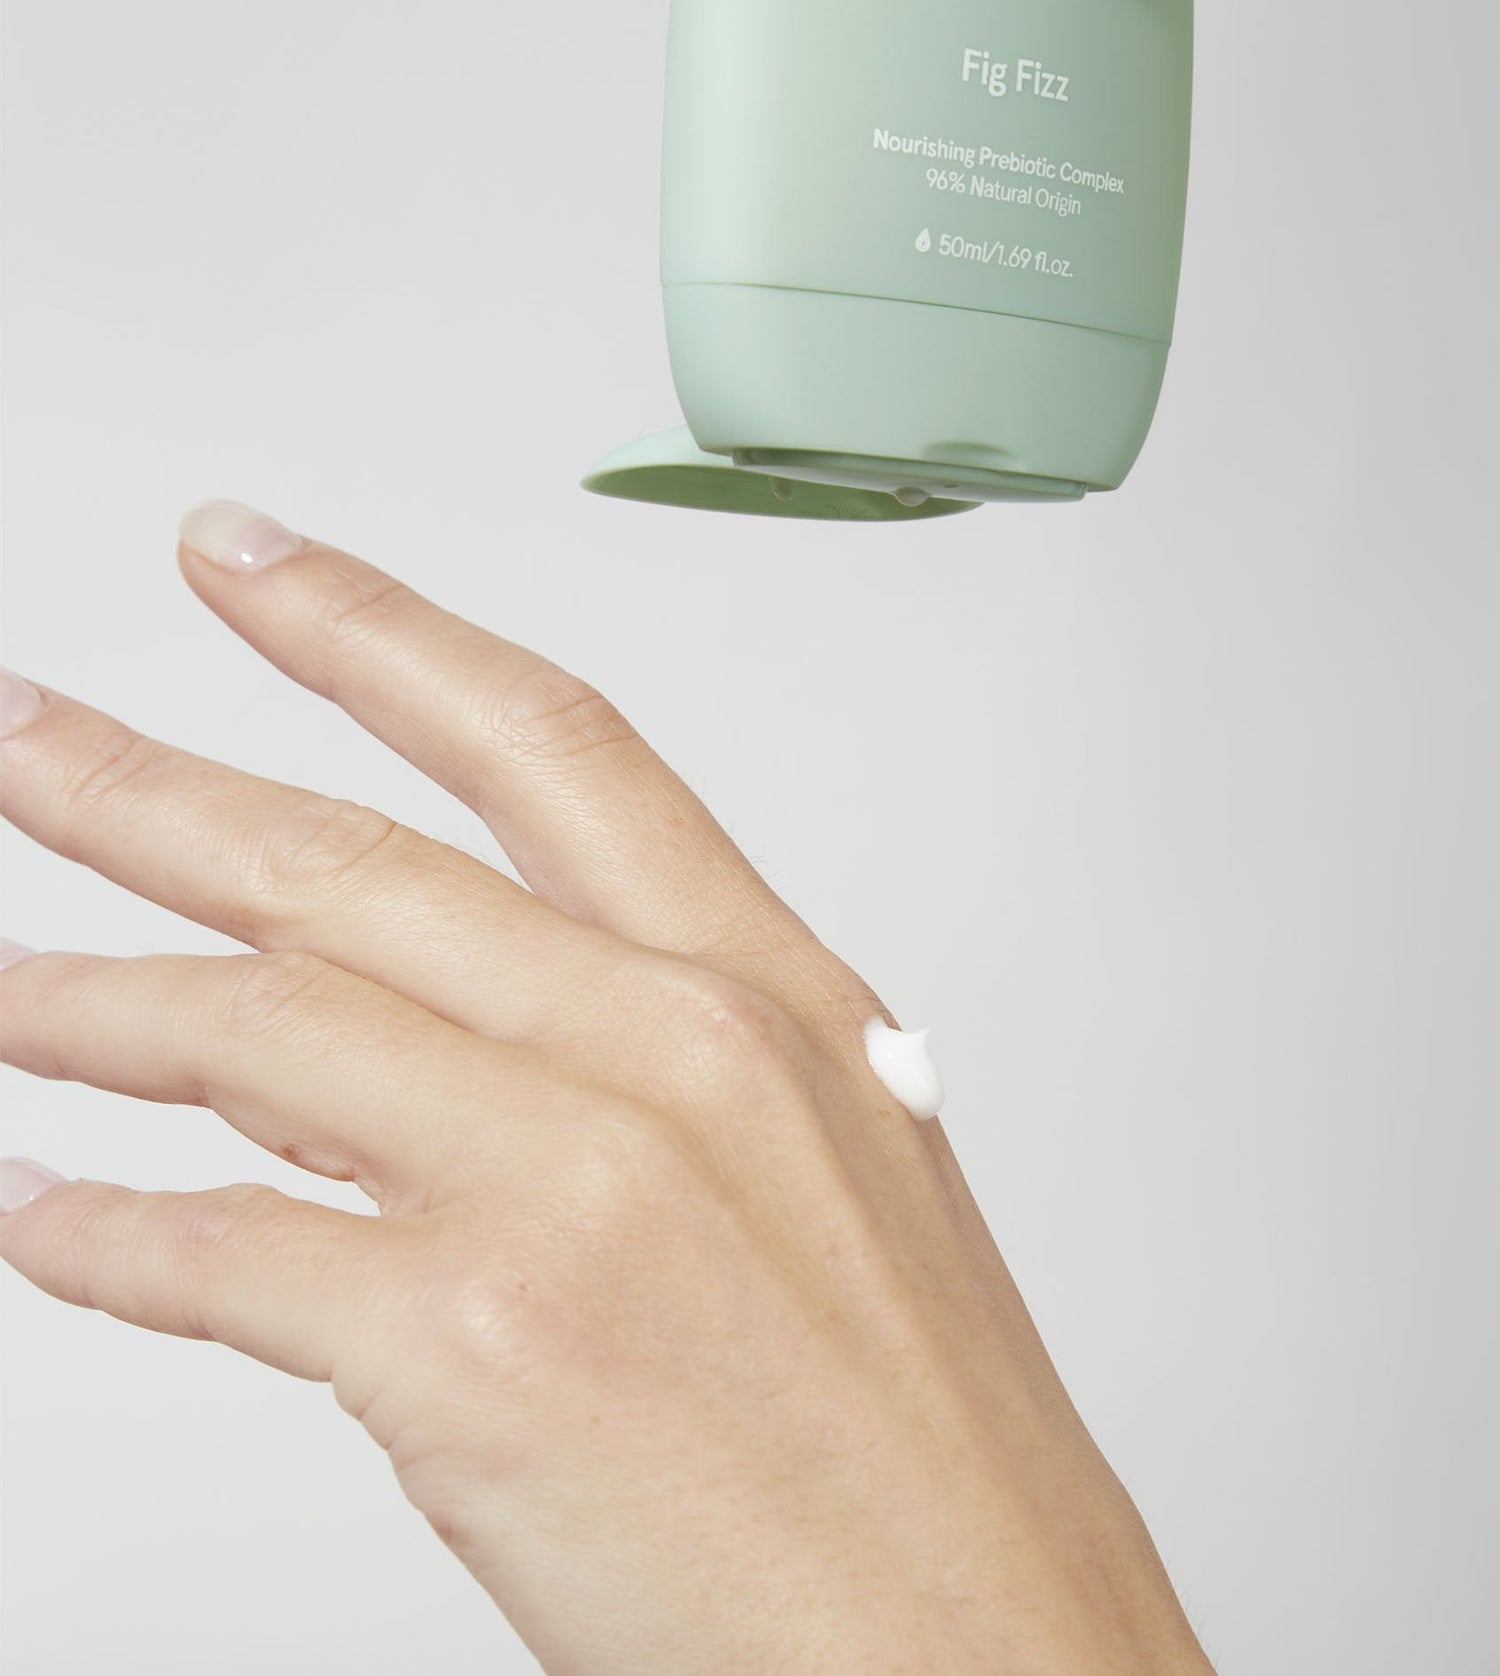 Hand Cream Fig Fizz - IOSOI Skin Lab